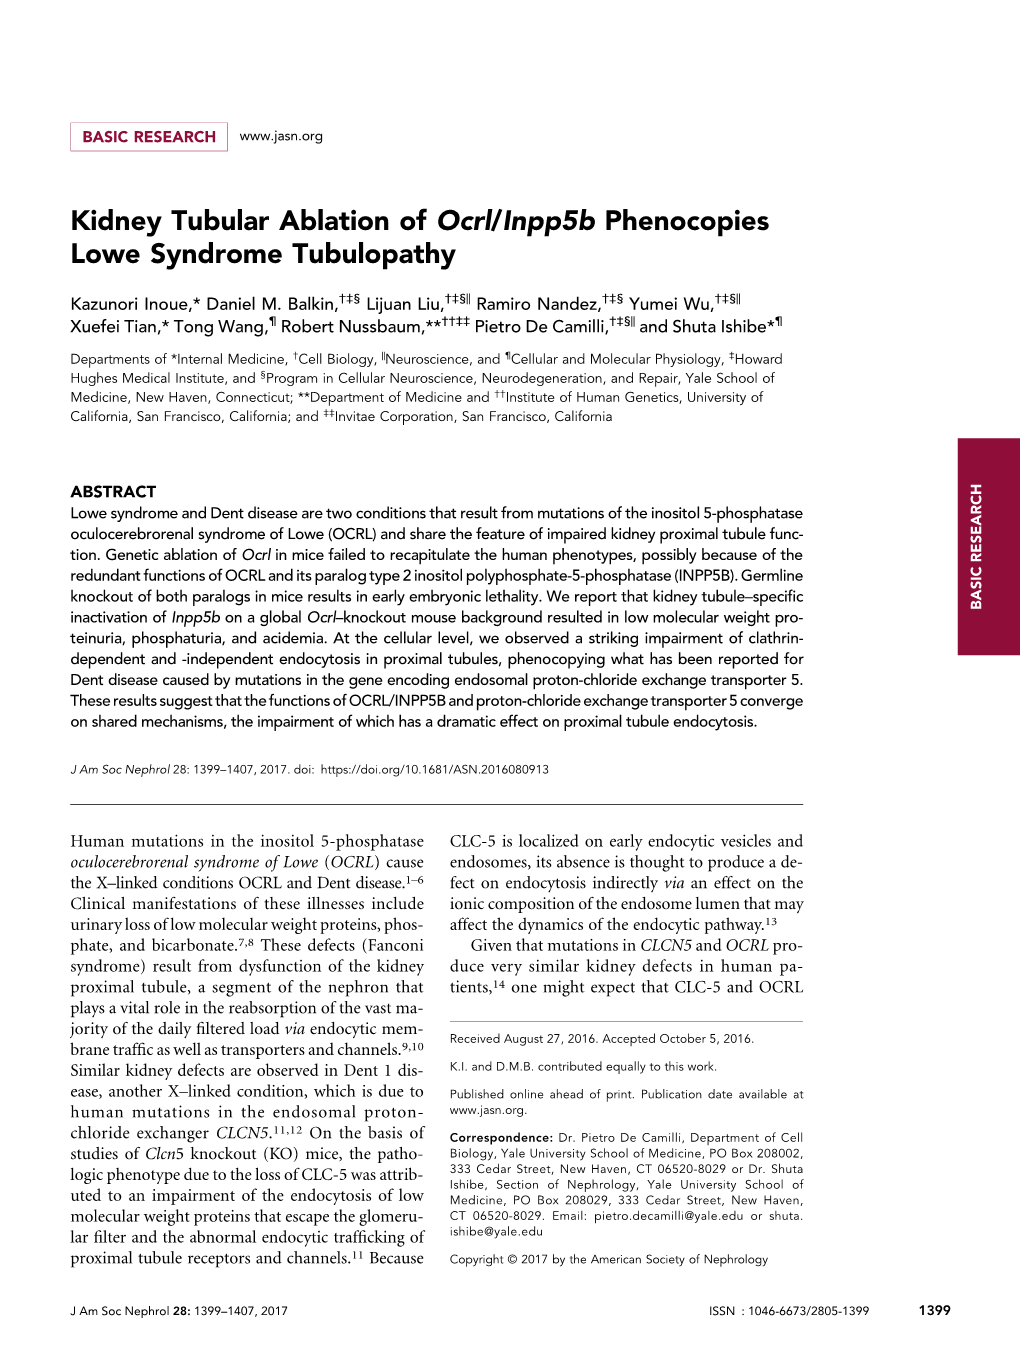 Kidney Tubular Ablation of Ocrl/Inpp5b Phenocopies Lowe Syndrome Tubulopathy